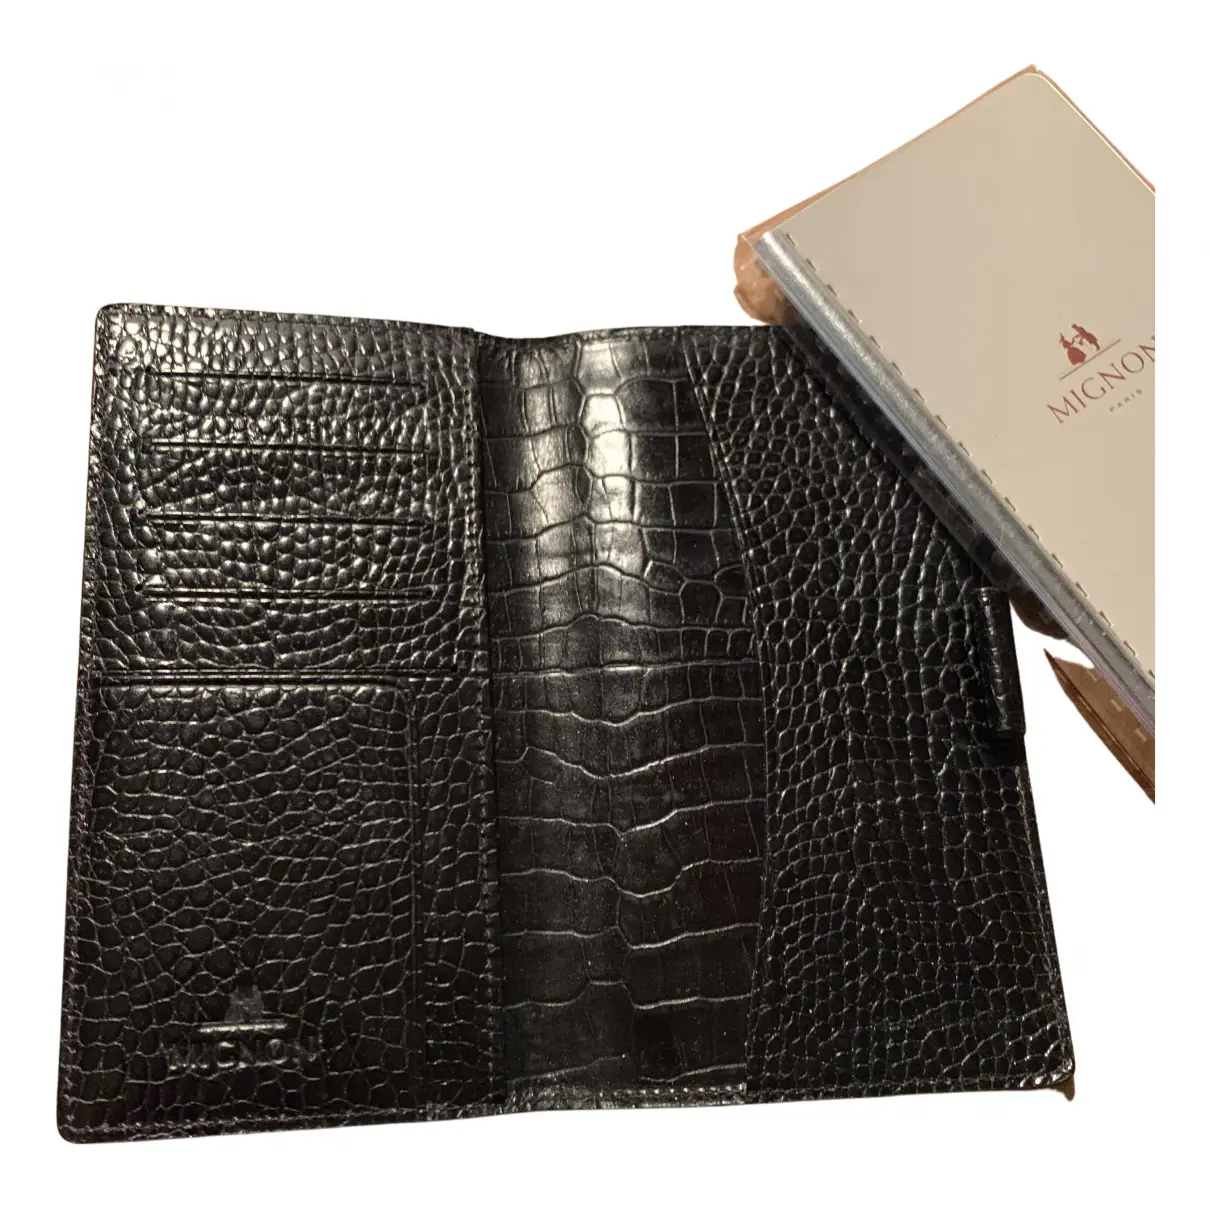 Buy Mignon Leather accessories online - Vintage